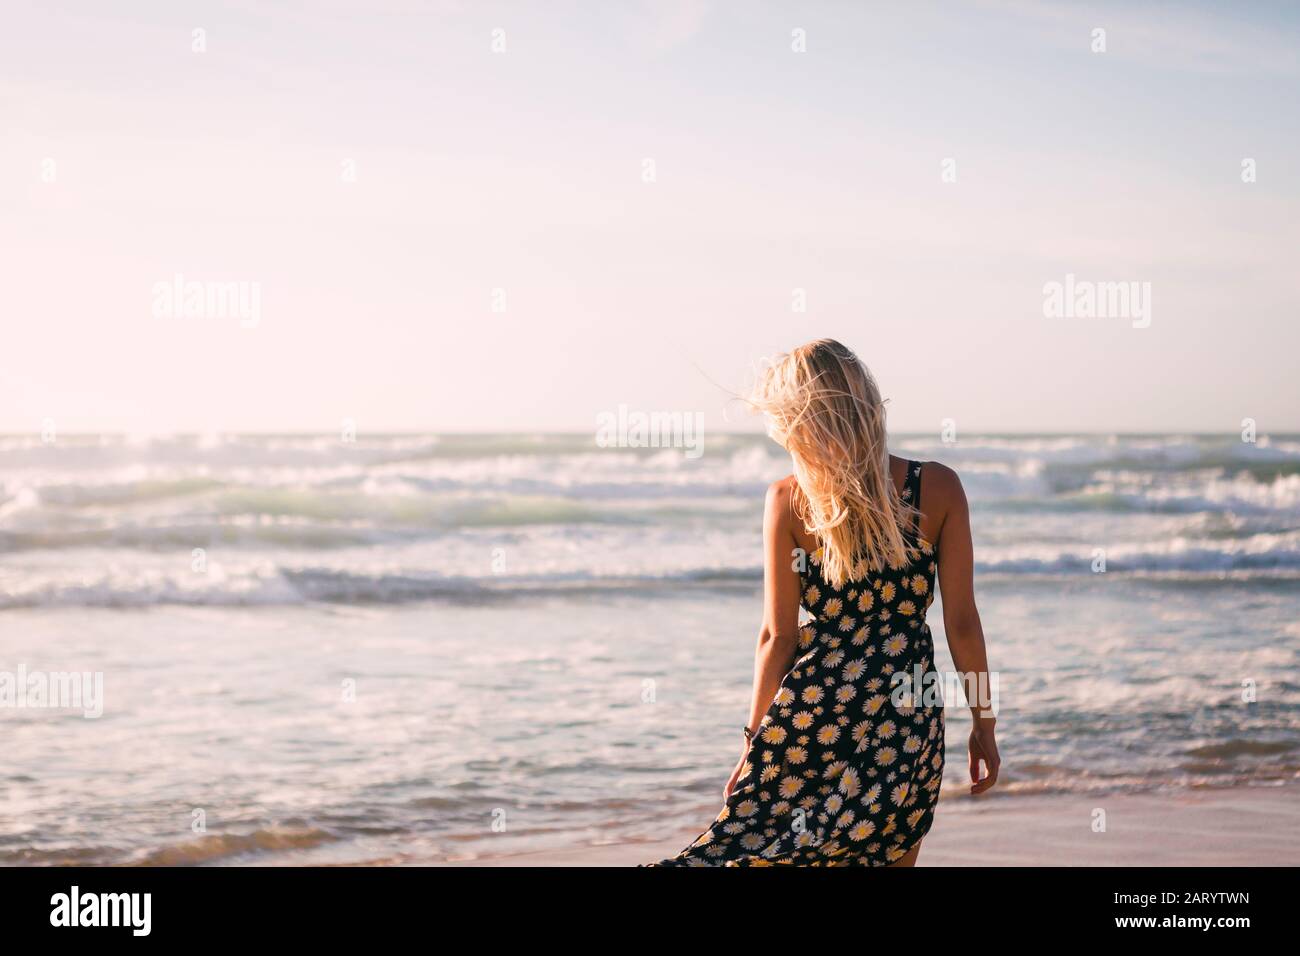 Woman wearing black dress on beach Stock Photo